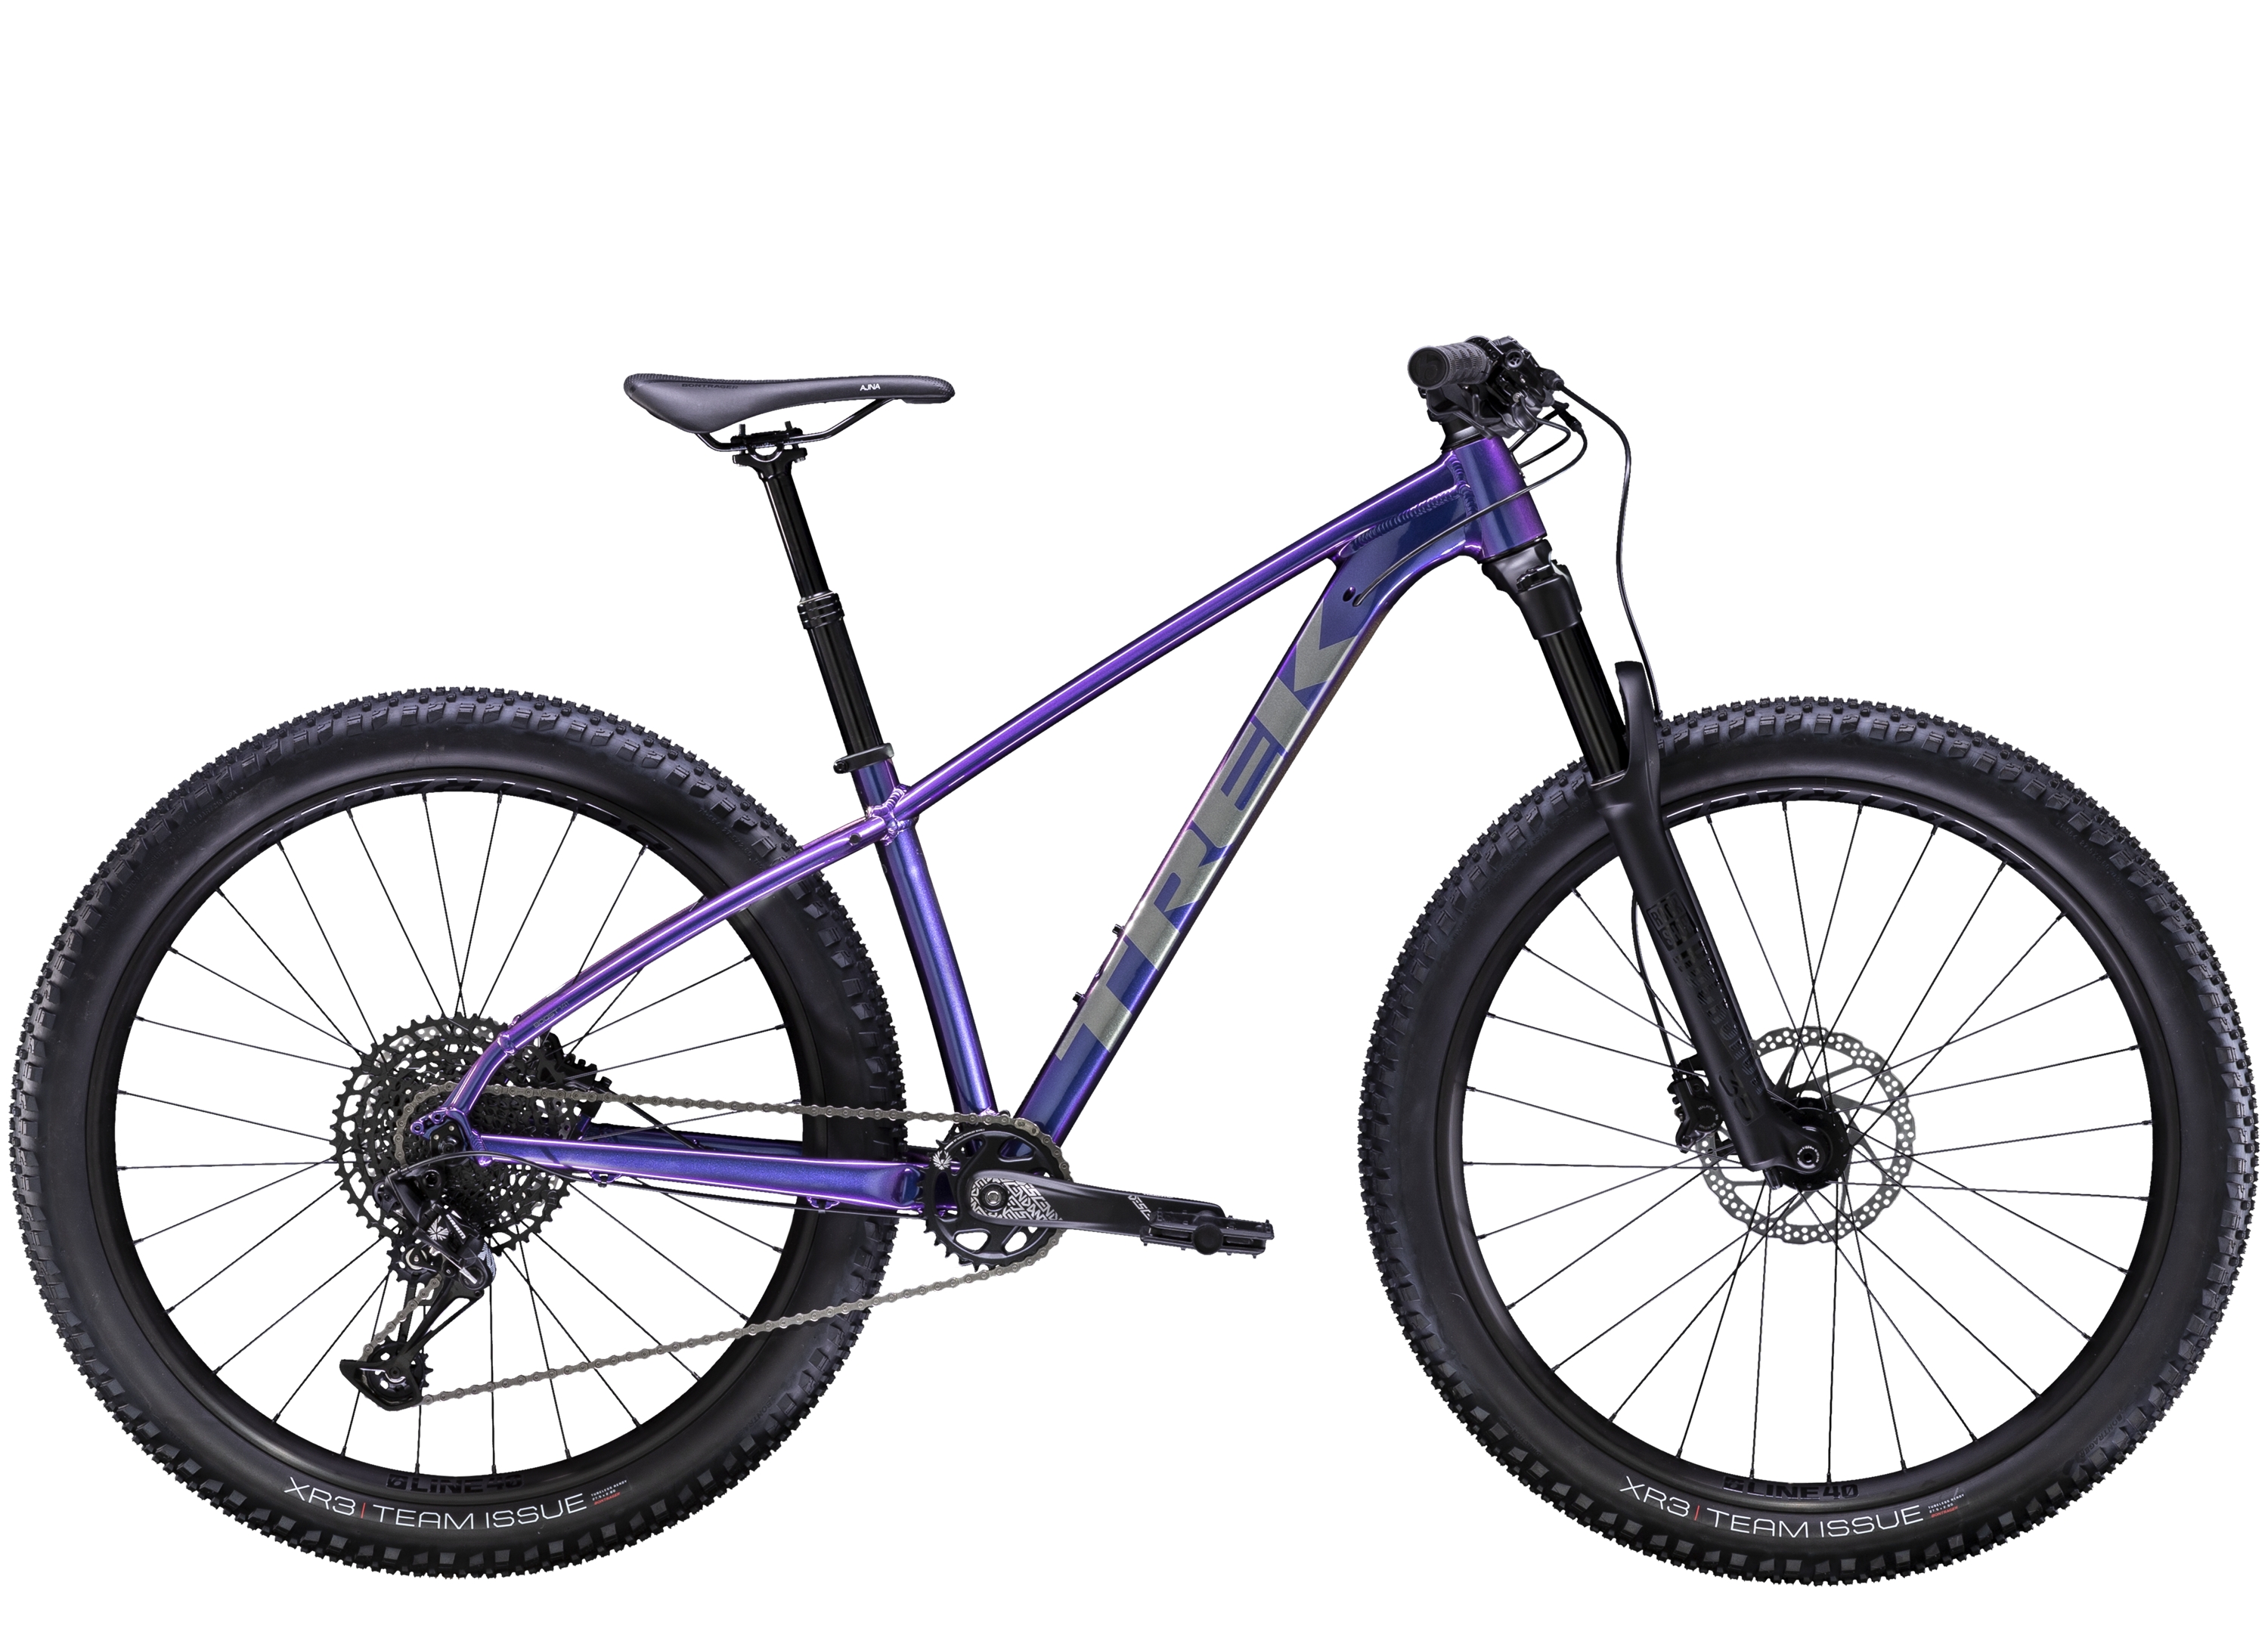 purple trek mountain bike